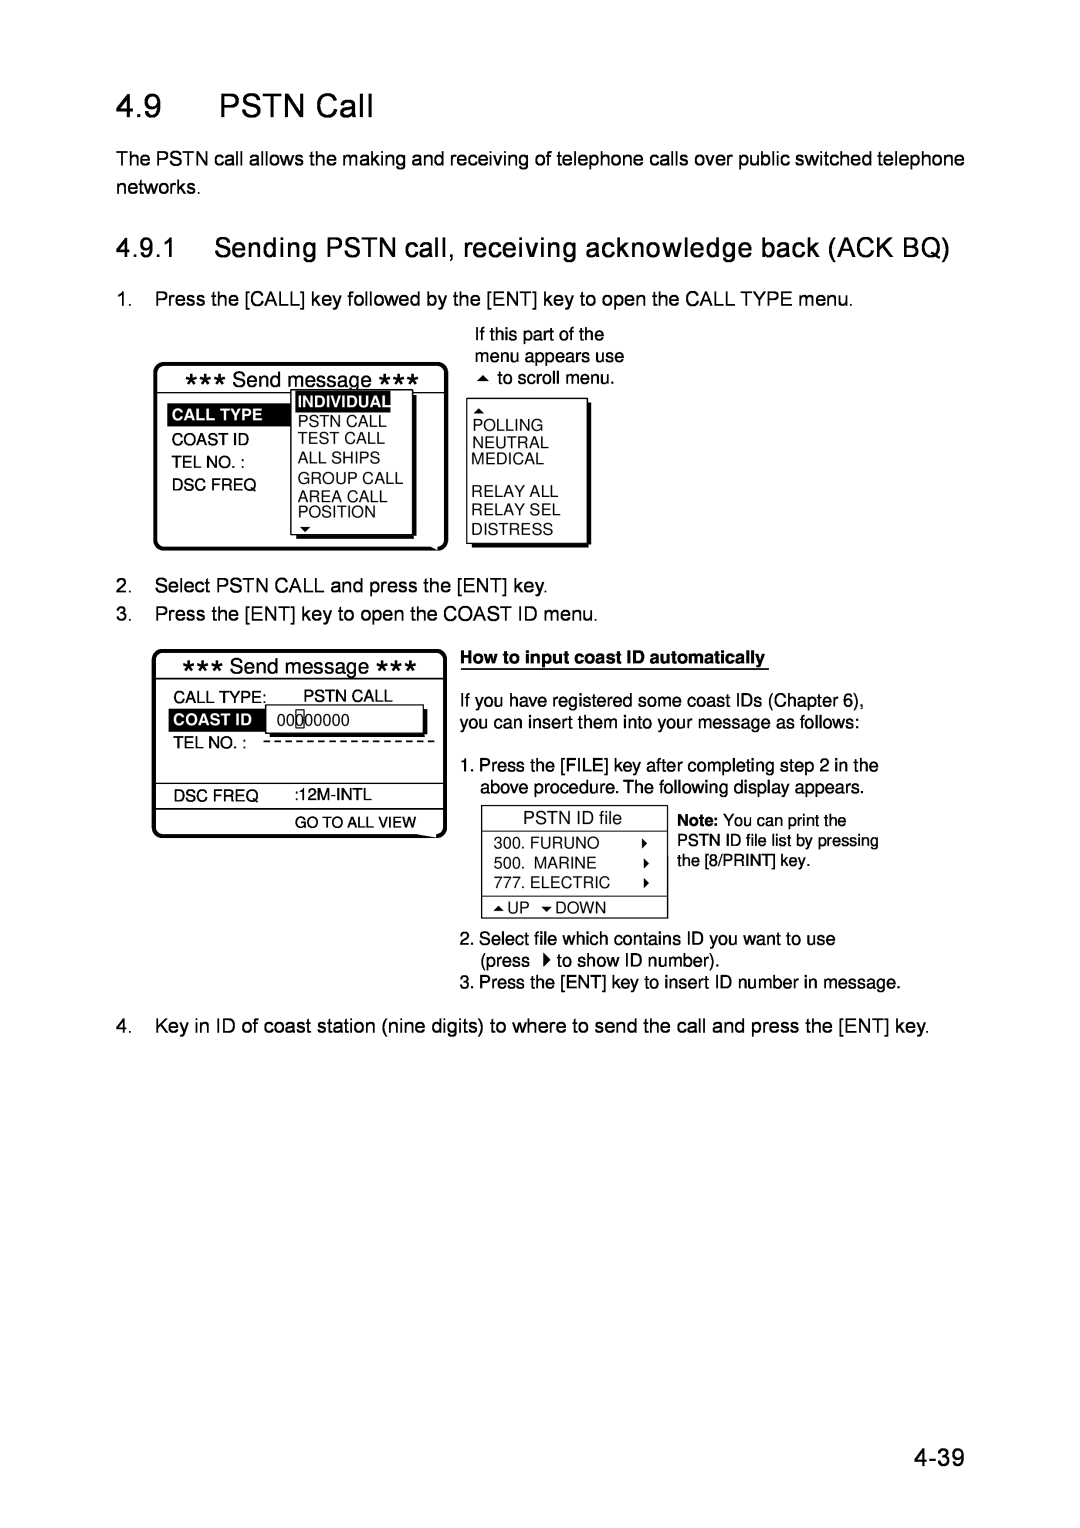 Furuno RC-1500-1T manual PSTN Call, Sending PSTN call, receiving acknowledge back ACK BQ, 4-39 